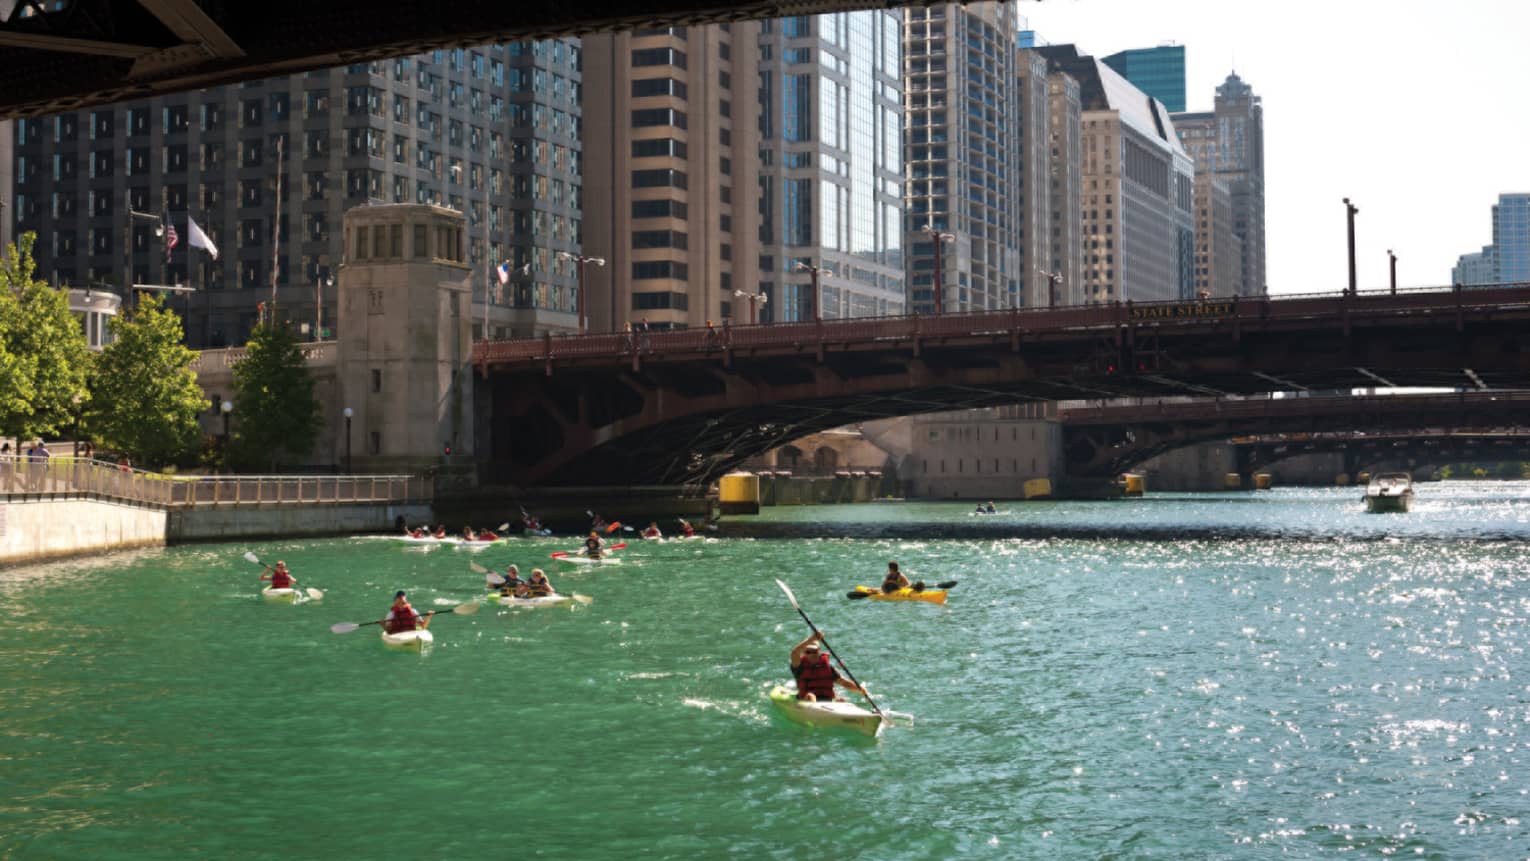 People kayaking on a river under a bridge.